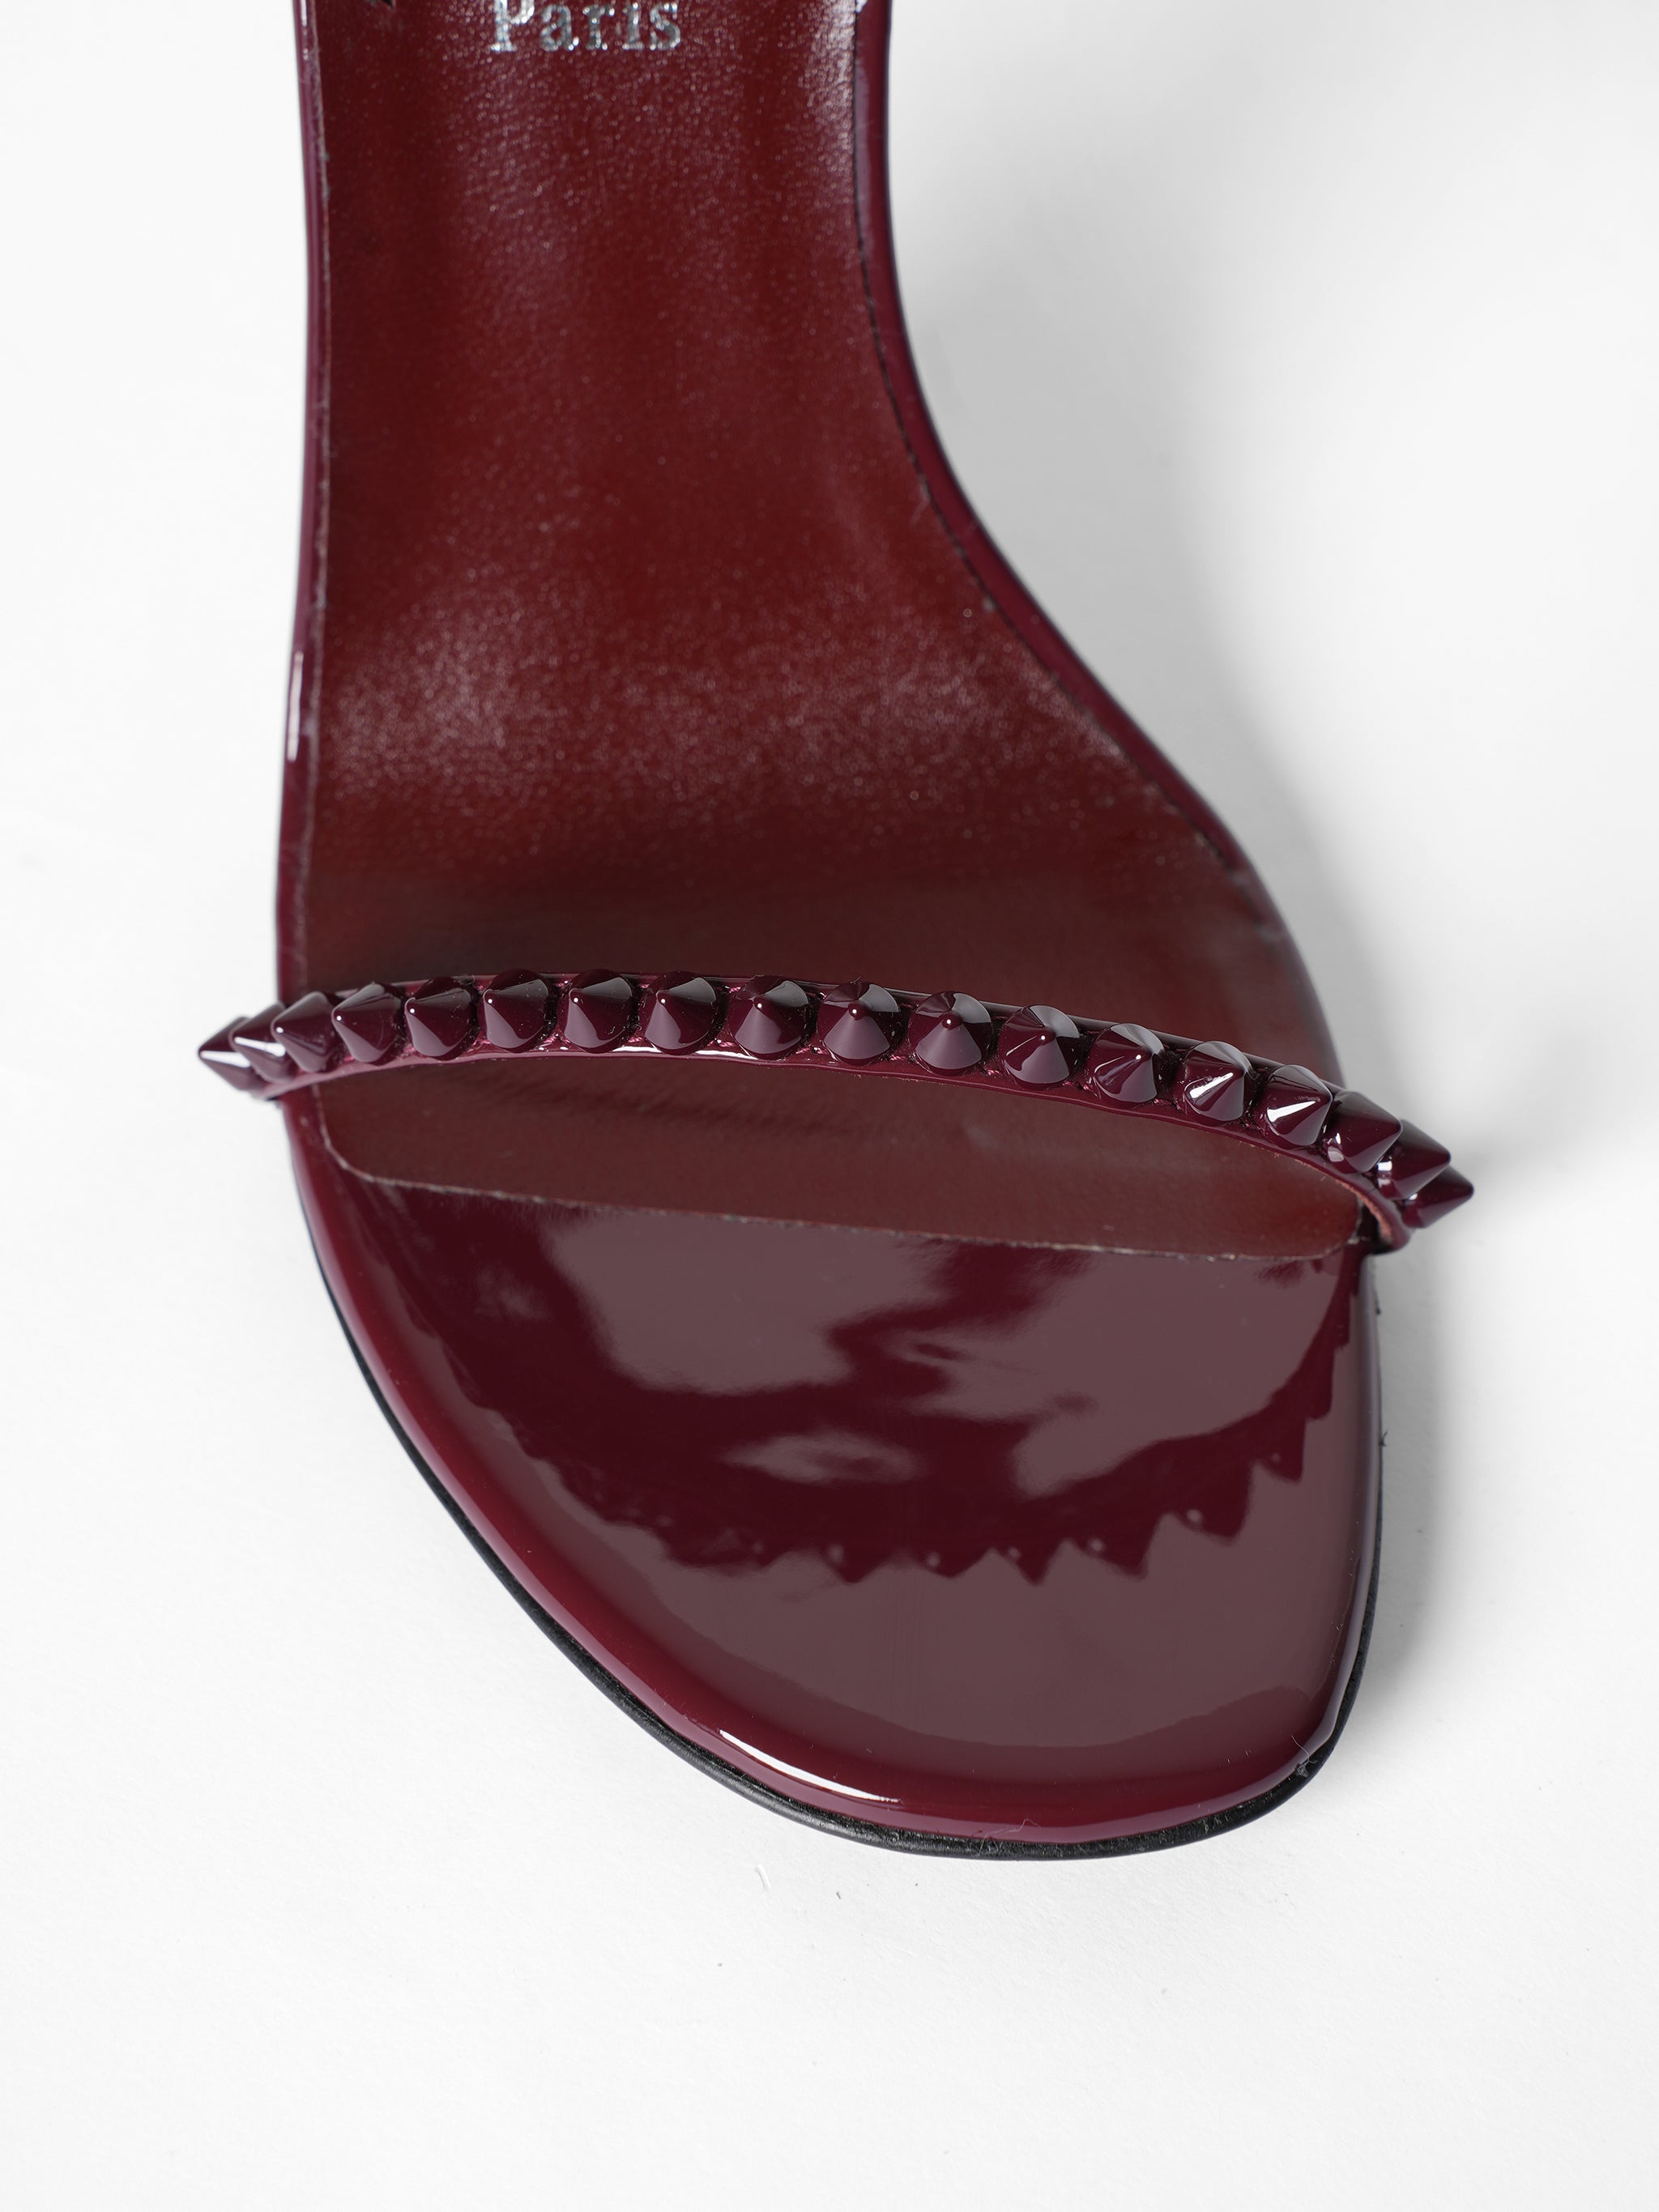 Christian Louboutin Heels So Me 100 Patent Sandal